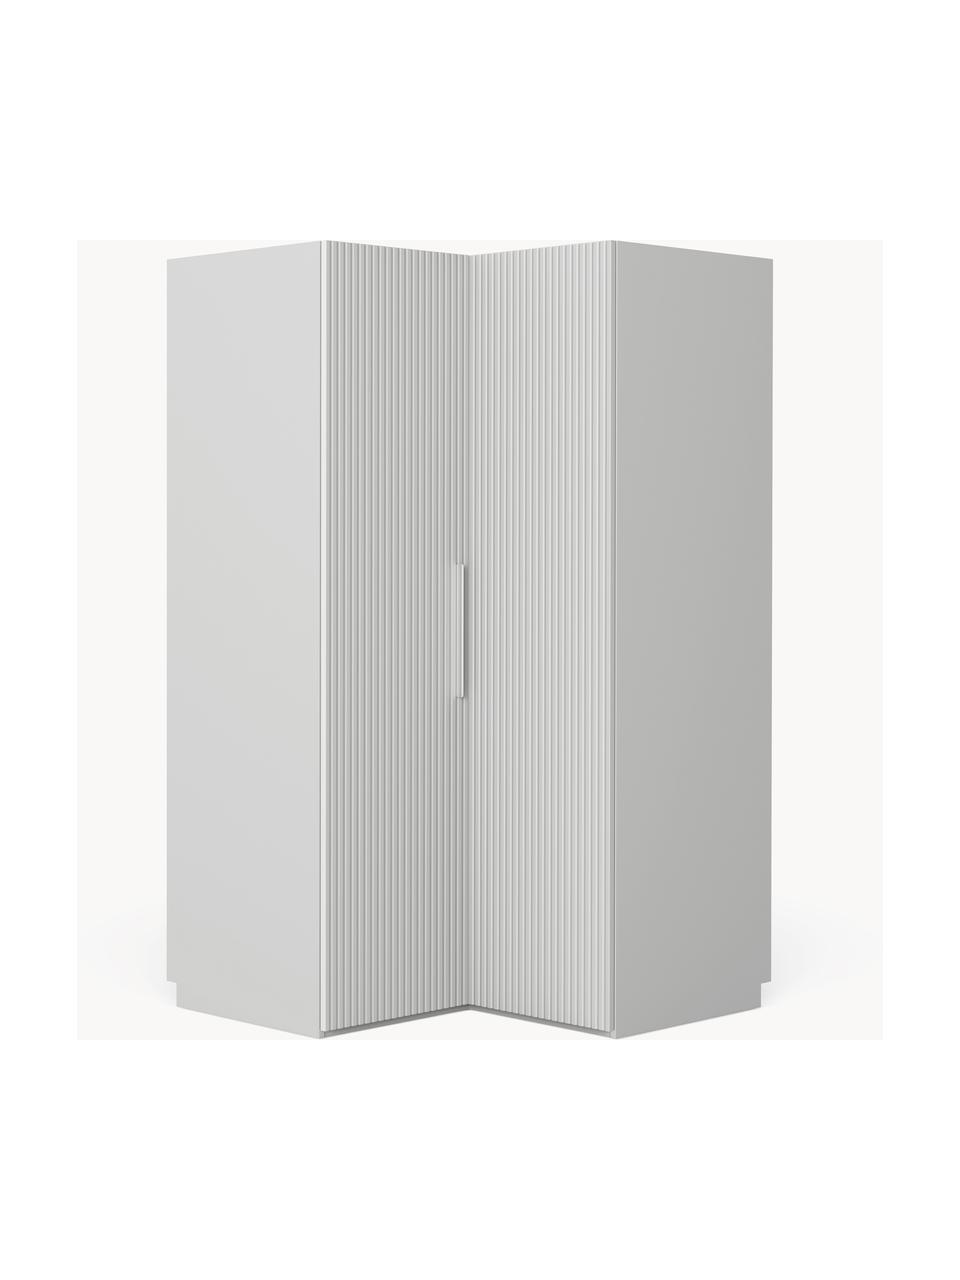 Modulární rohová šatní skříň Simone, šířka 115 cm, Dřevo, šedá, Rohový modul, Š 115 cm x V 200 cm